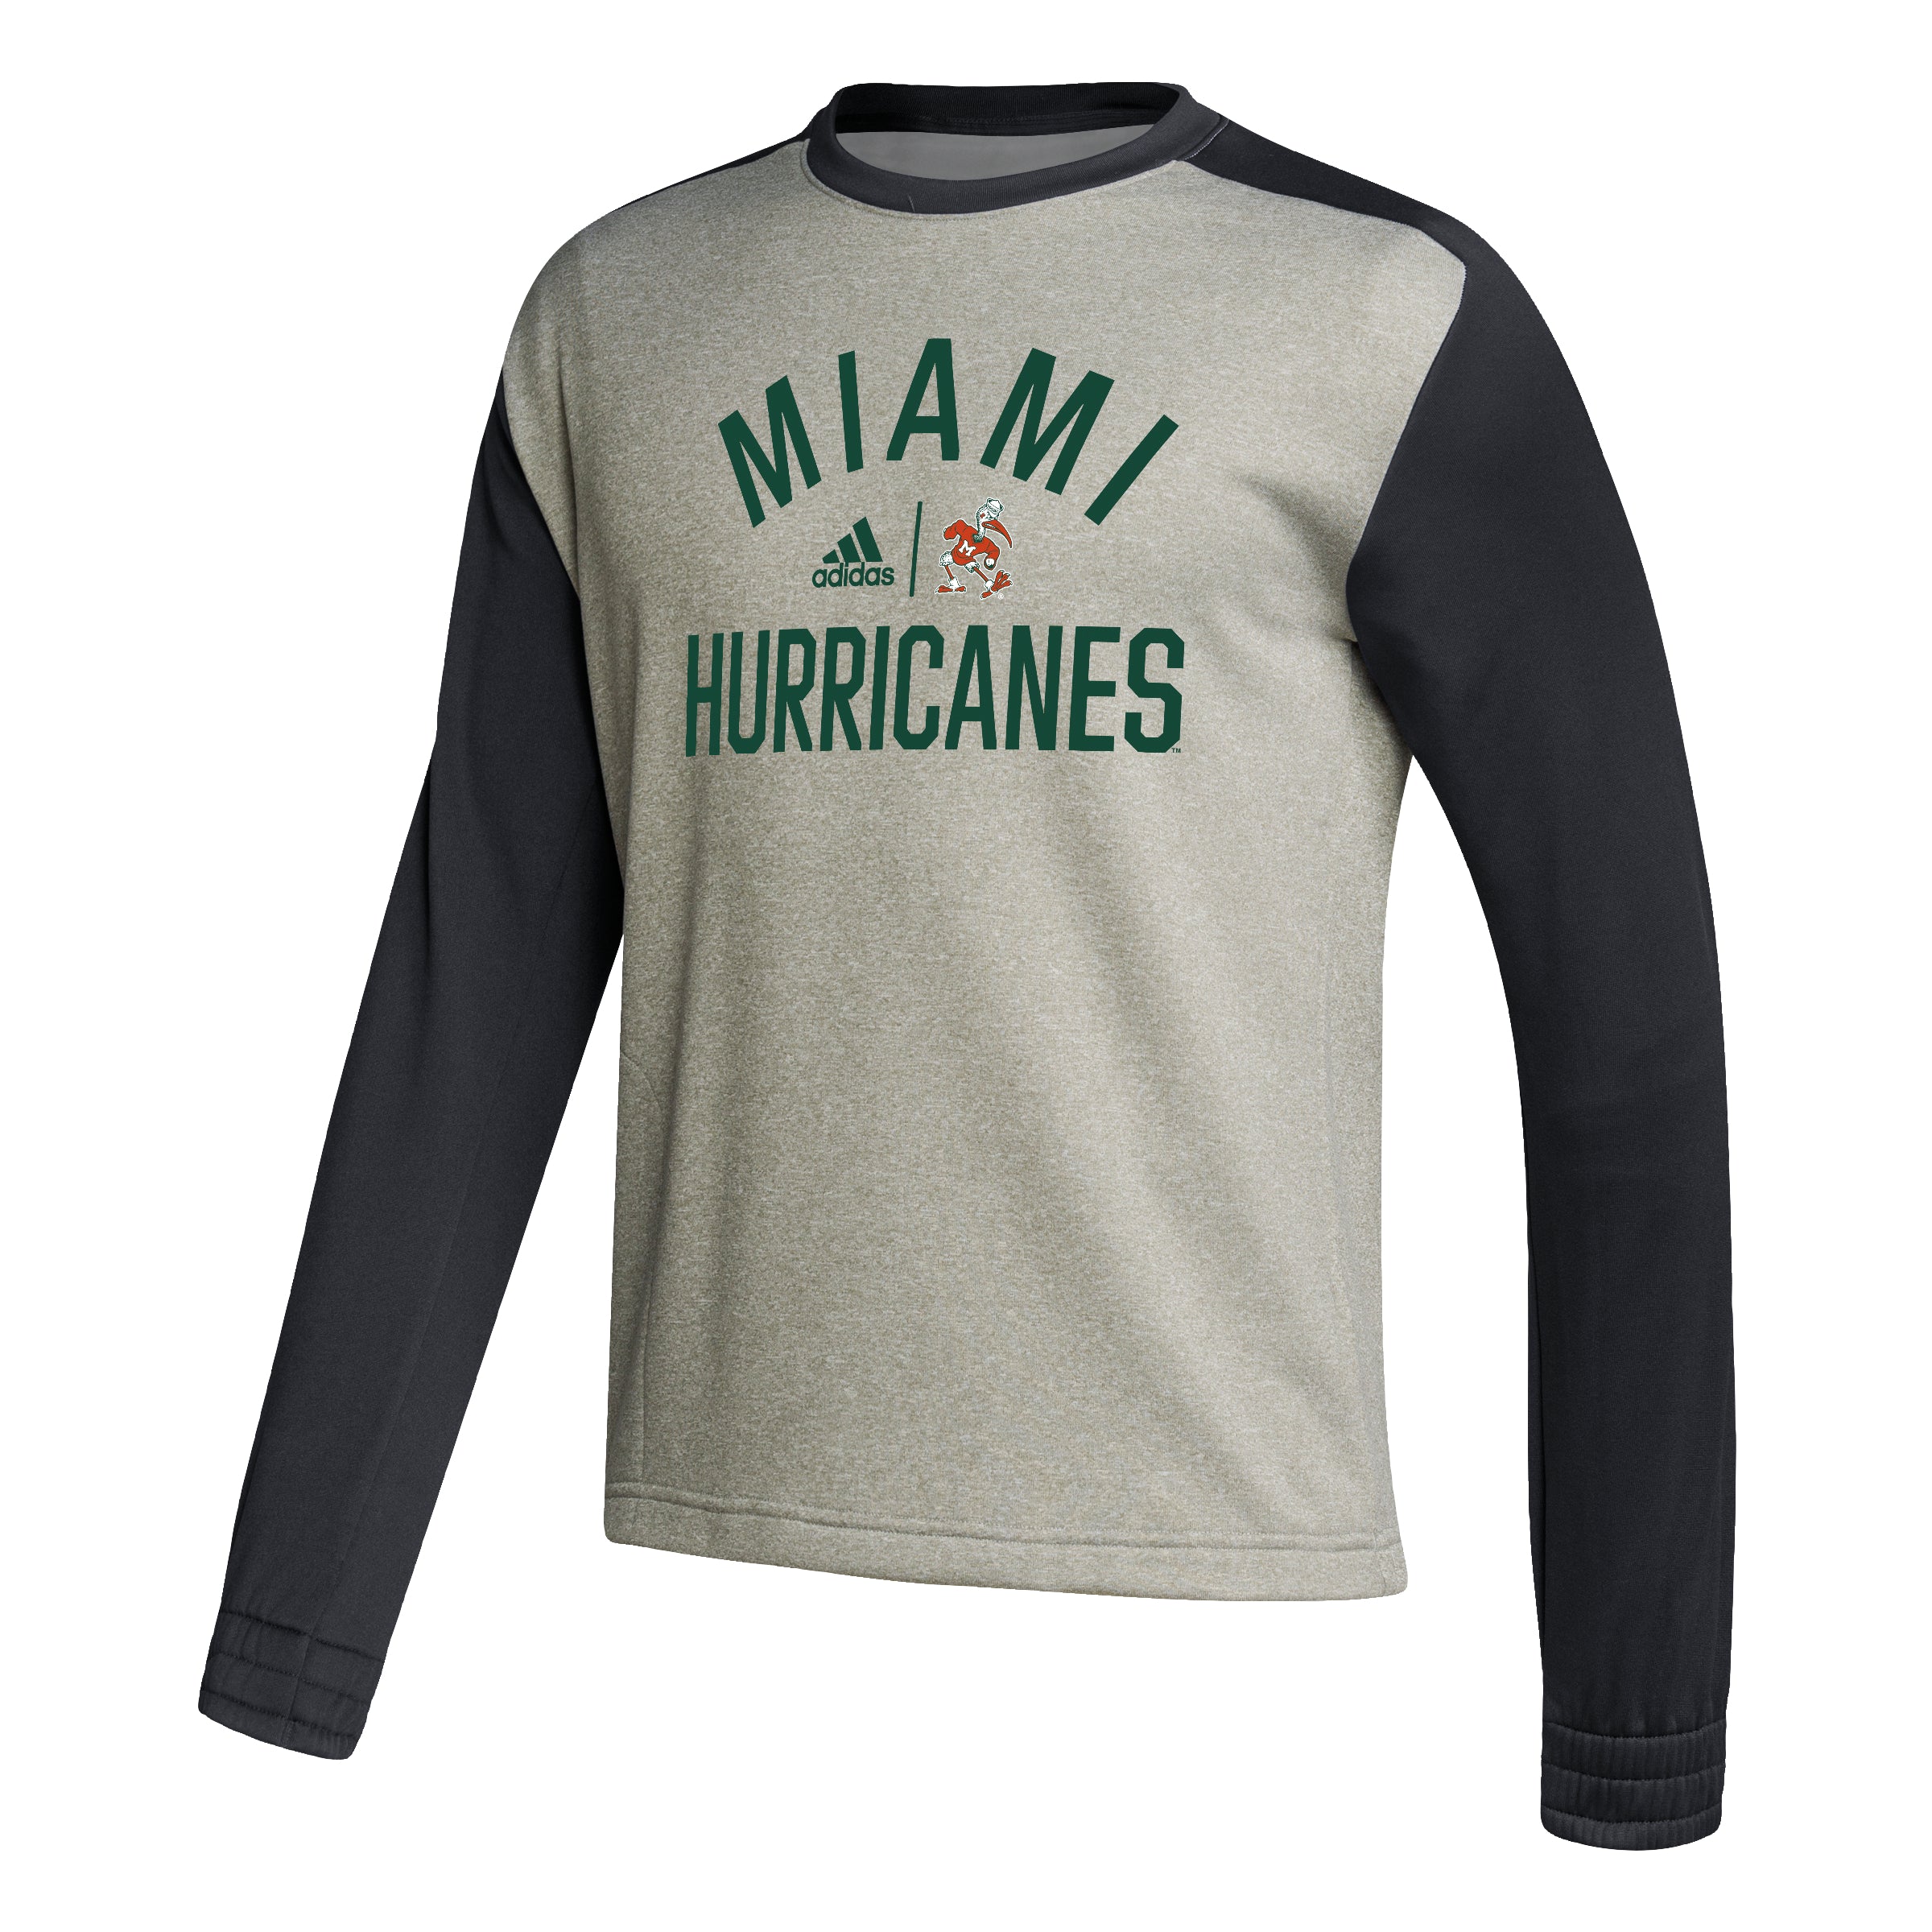 Miami Hurricanes adidas Locker Heritage Crew Fleece Sweatshirt - Grey/Black